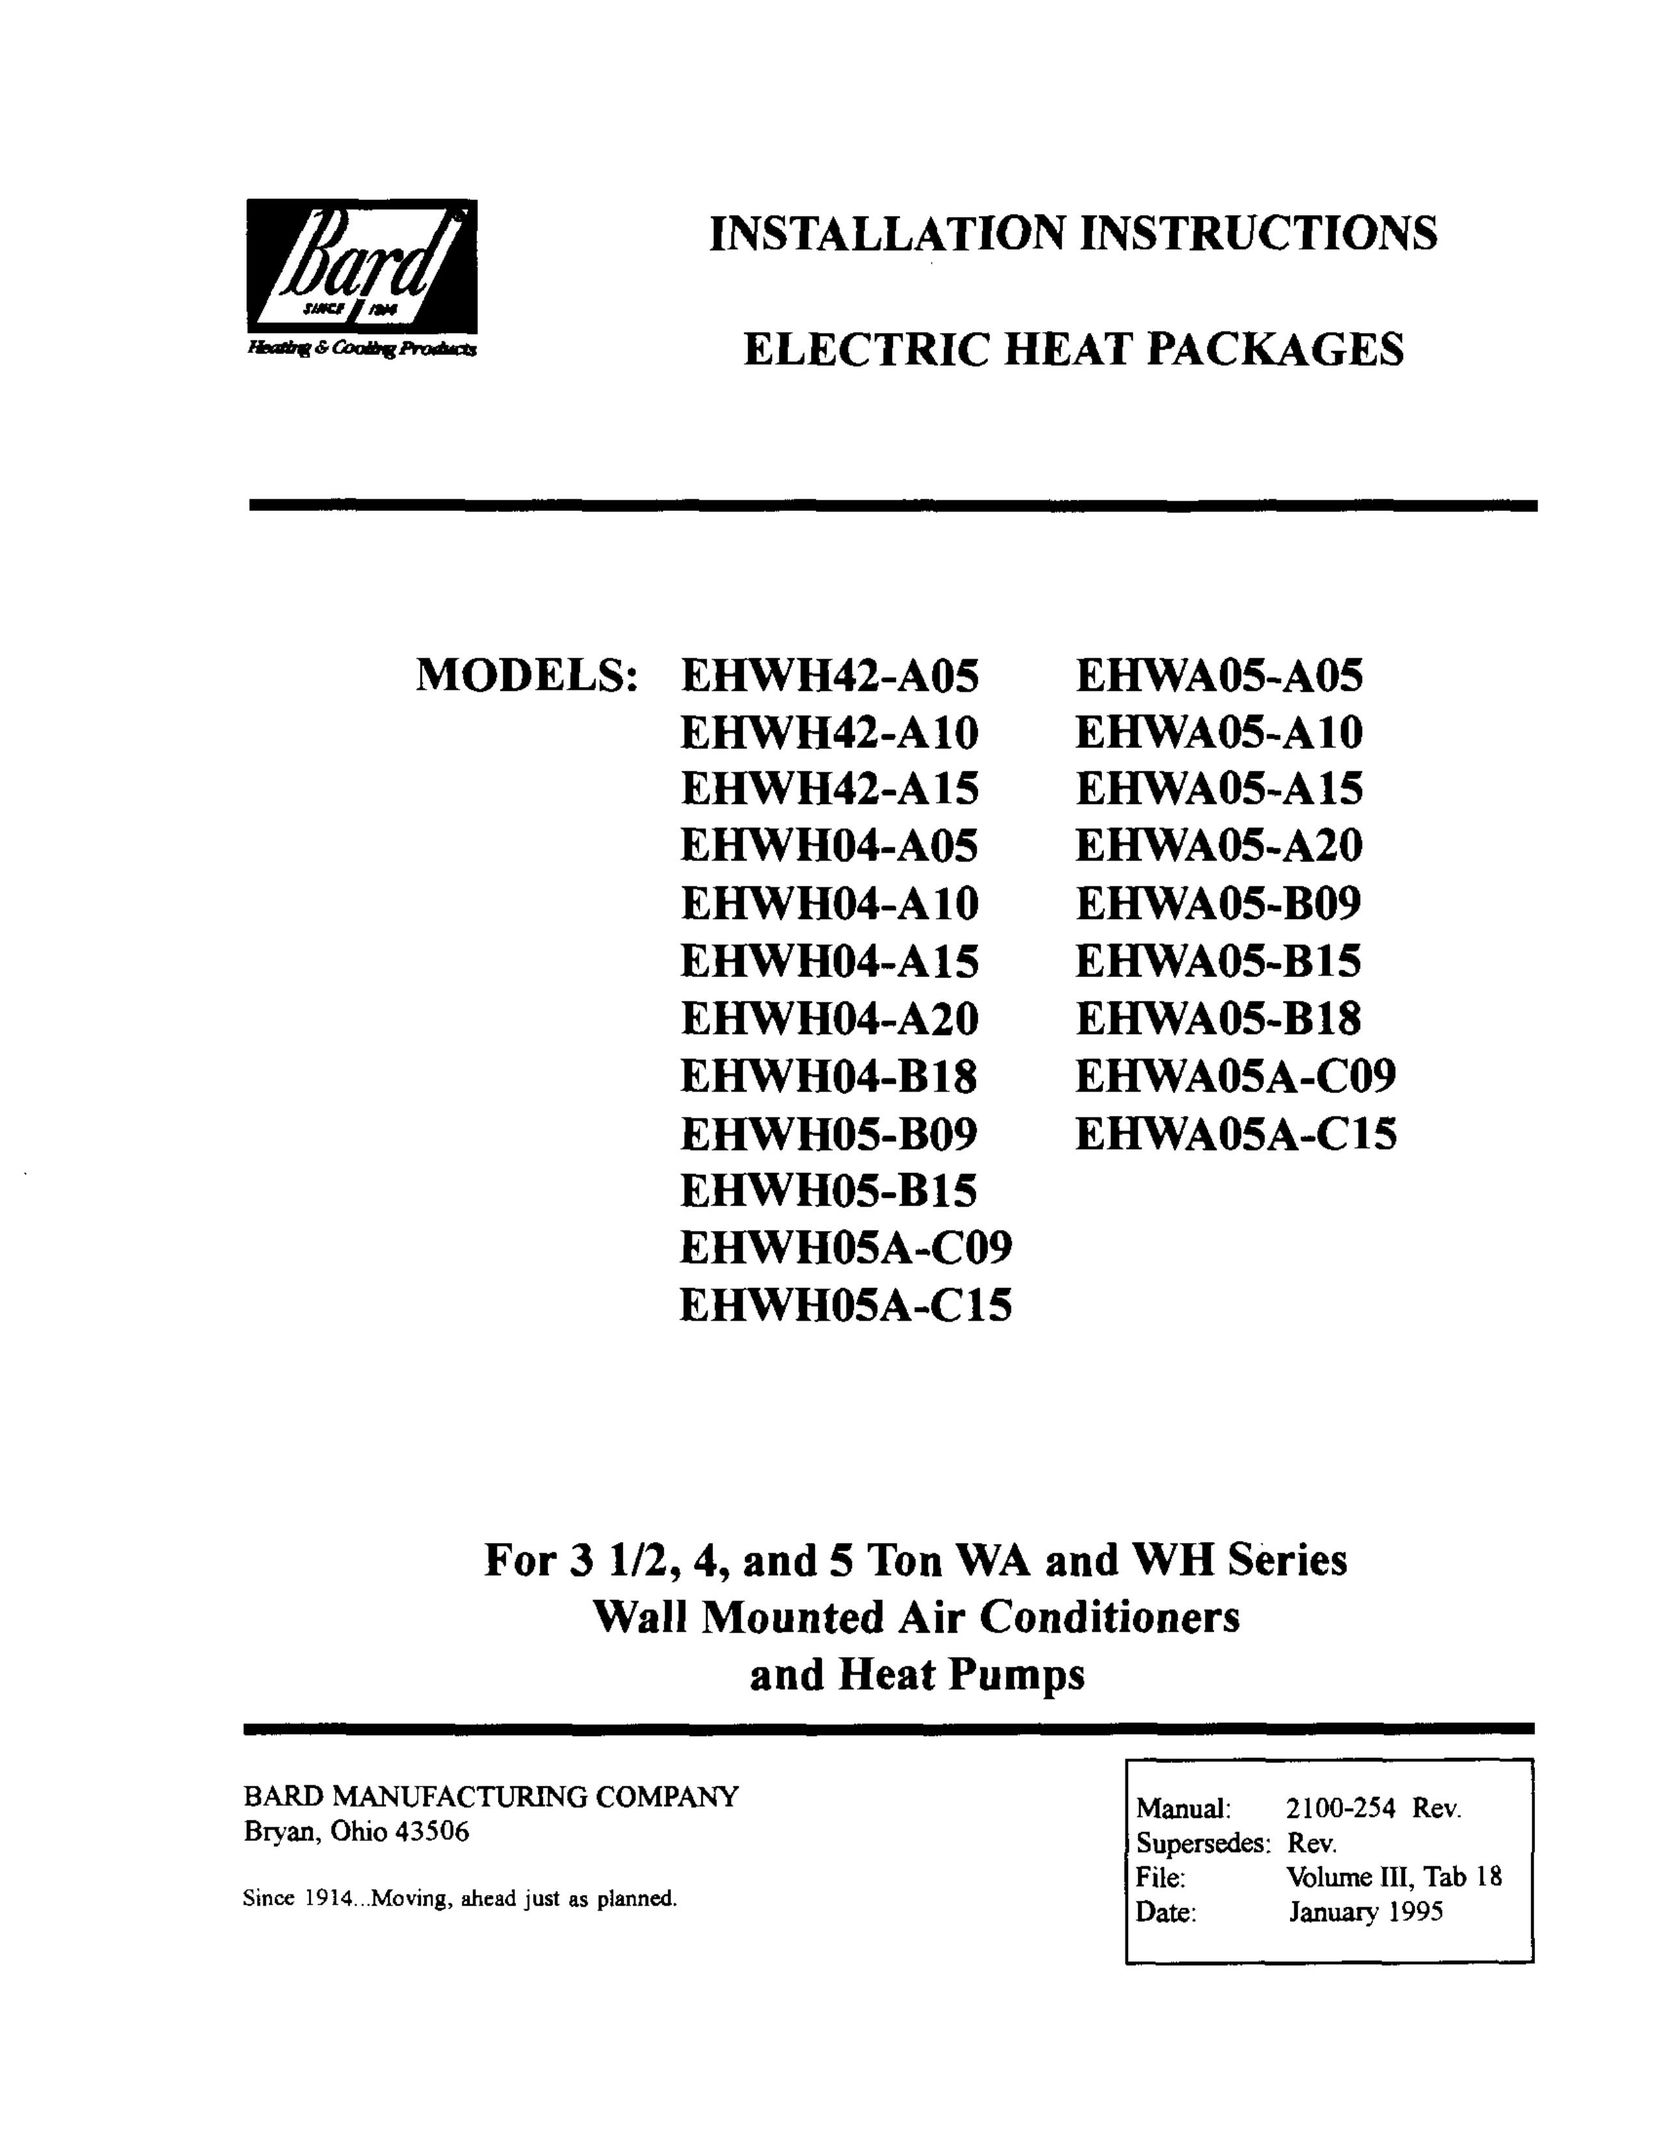 Bard EHWHA05-B18 Heat Gun User Manual